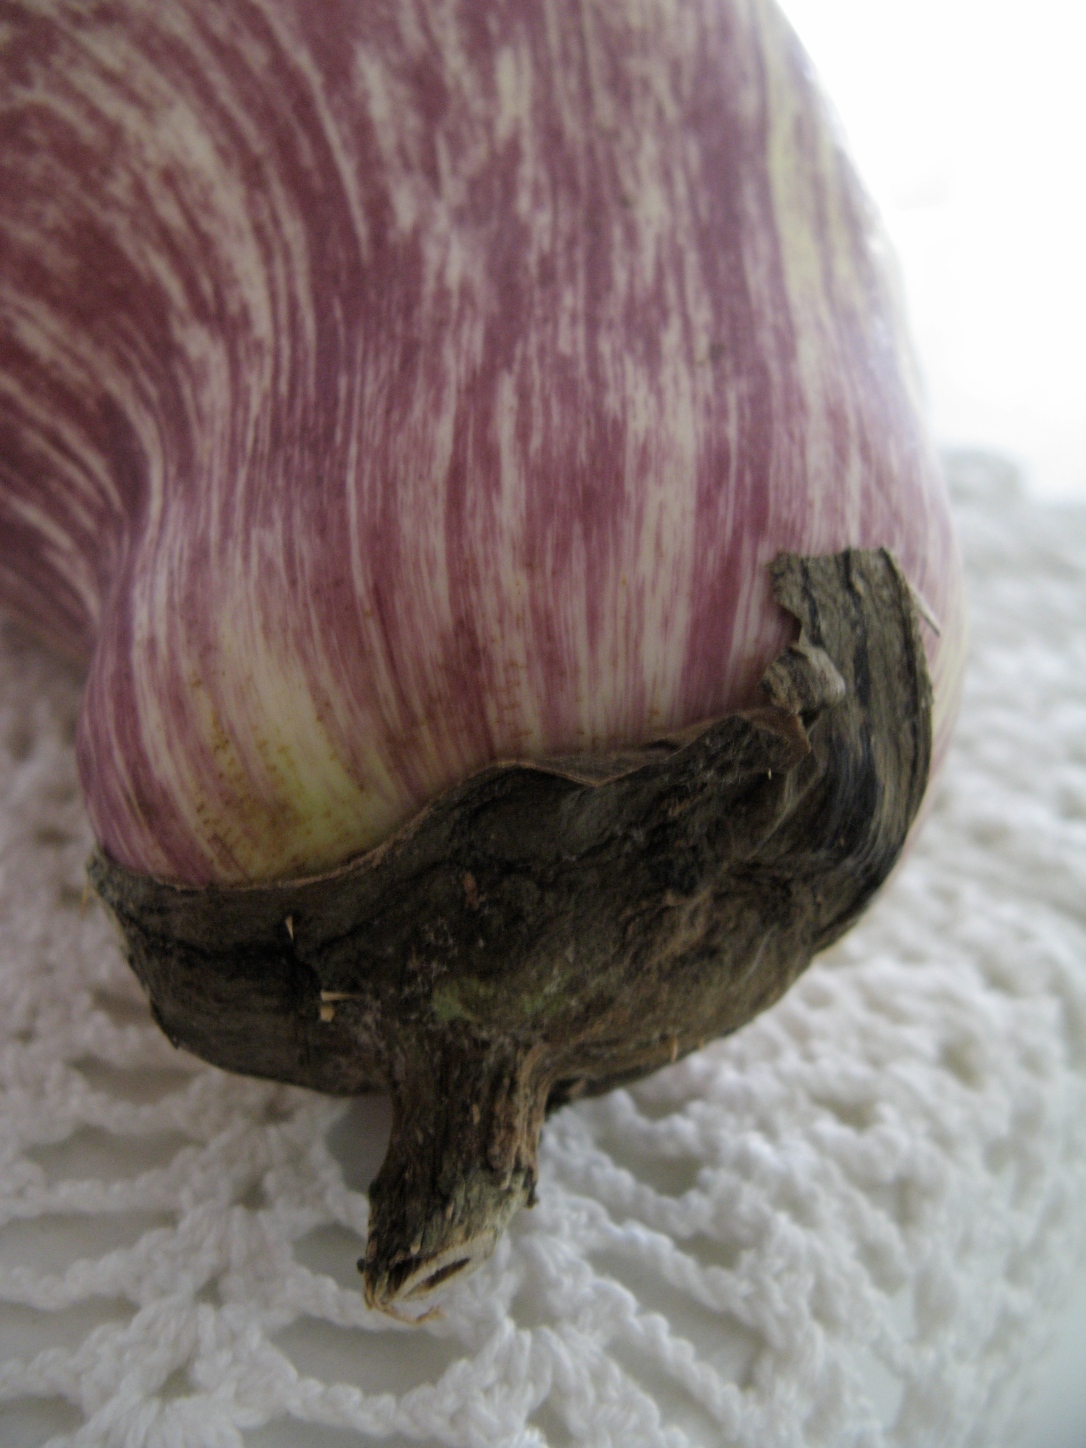 striped eggplant